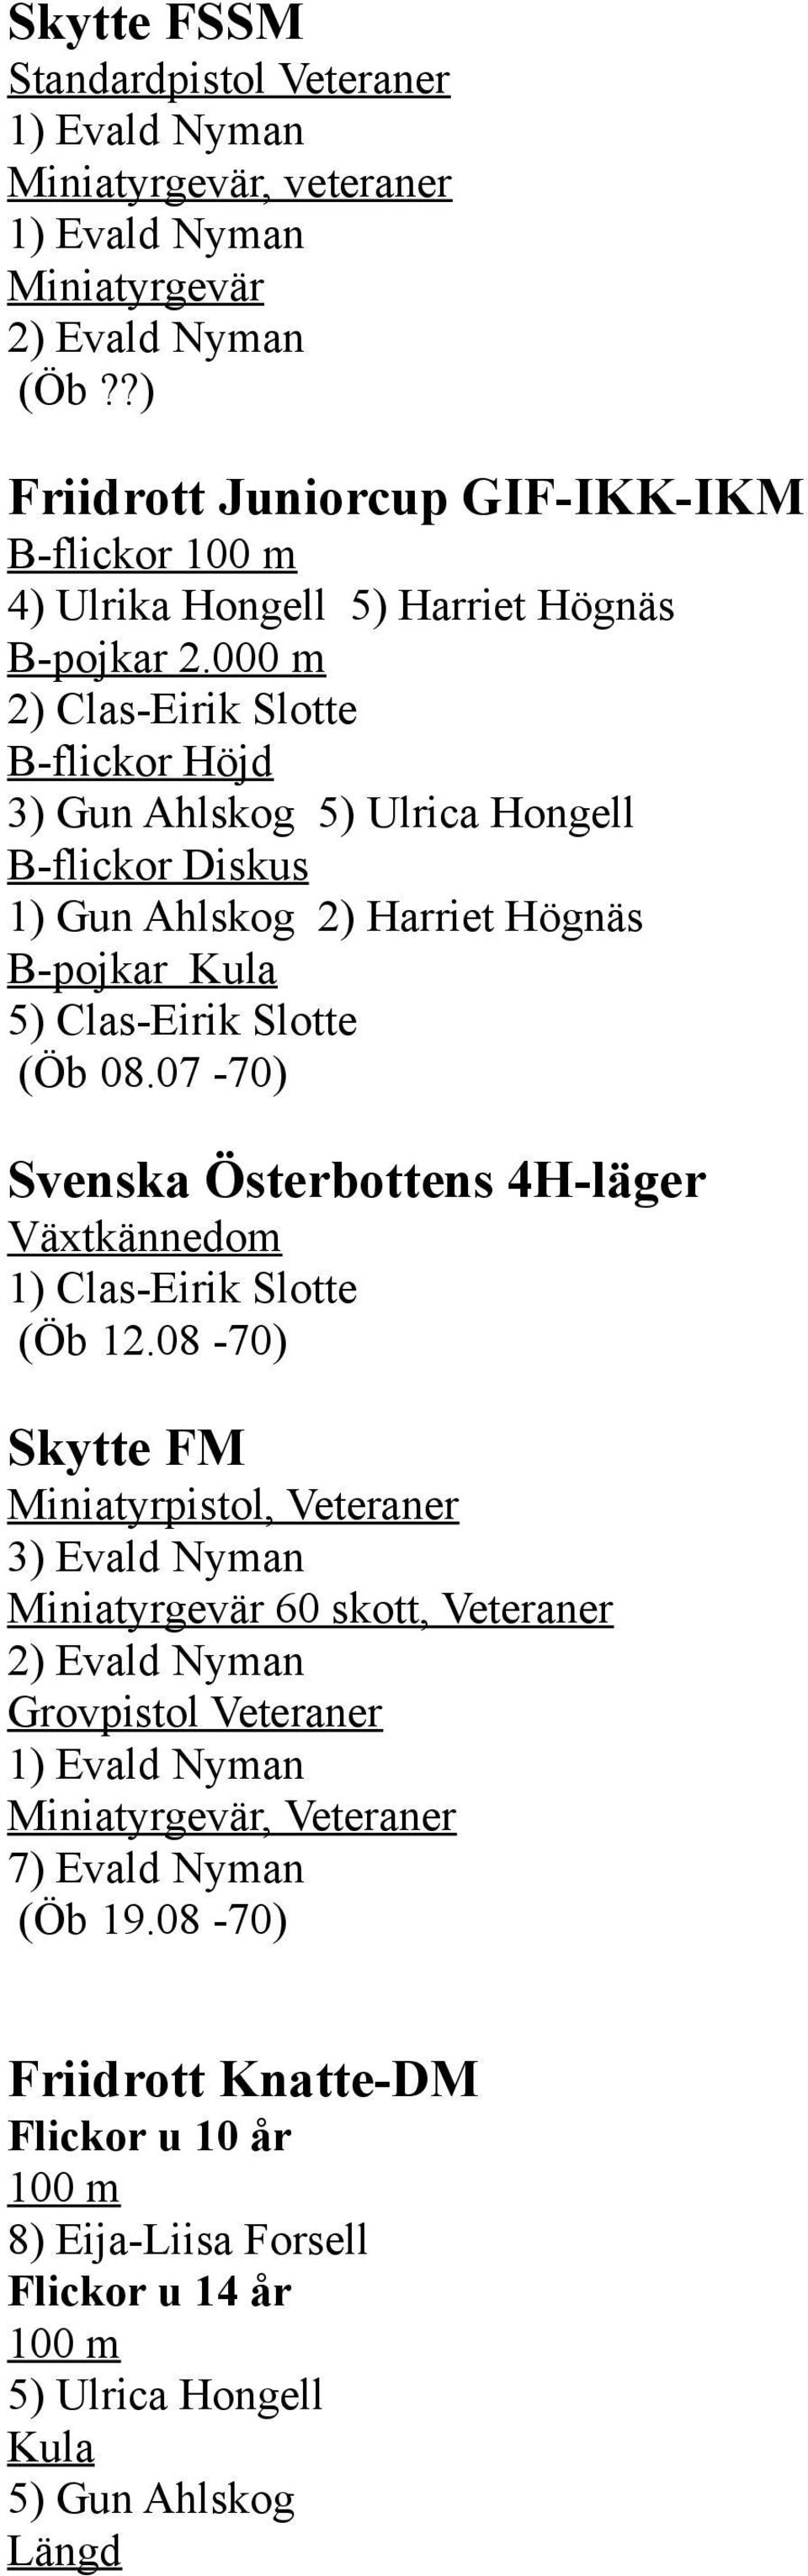 000 m 2) Clas-Eirik Slotte B-flickor 3) Gun Ahlskog 5) Ulrica Hongell B-flickor Diskus 1) Gun Ahlskog 2) Harriet Högnäs B-pojkar 5) Clas-Eirik Slotte (Öb 08.